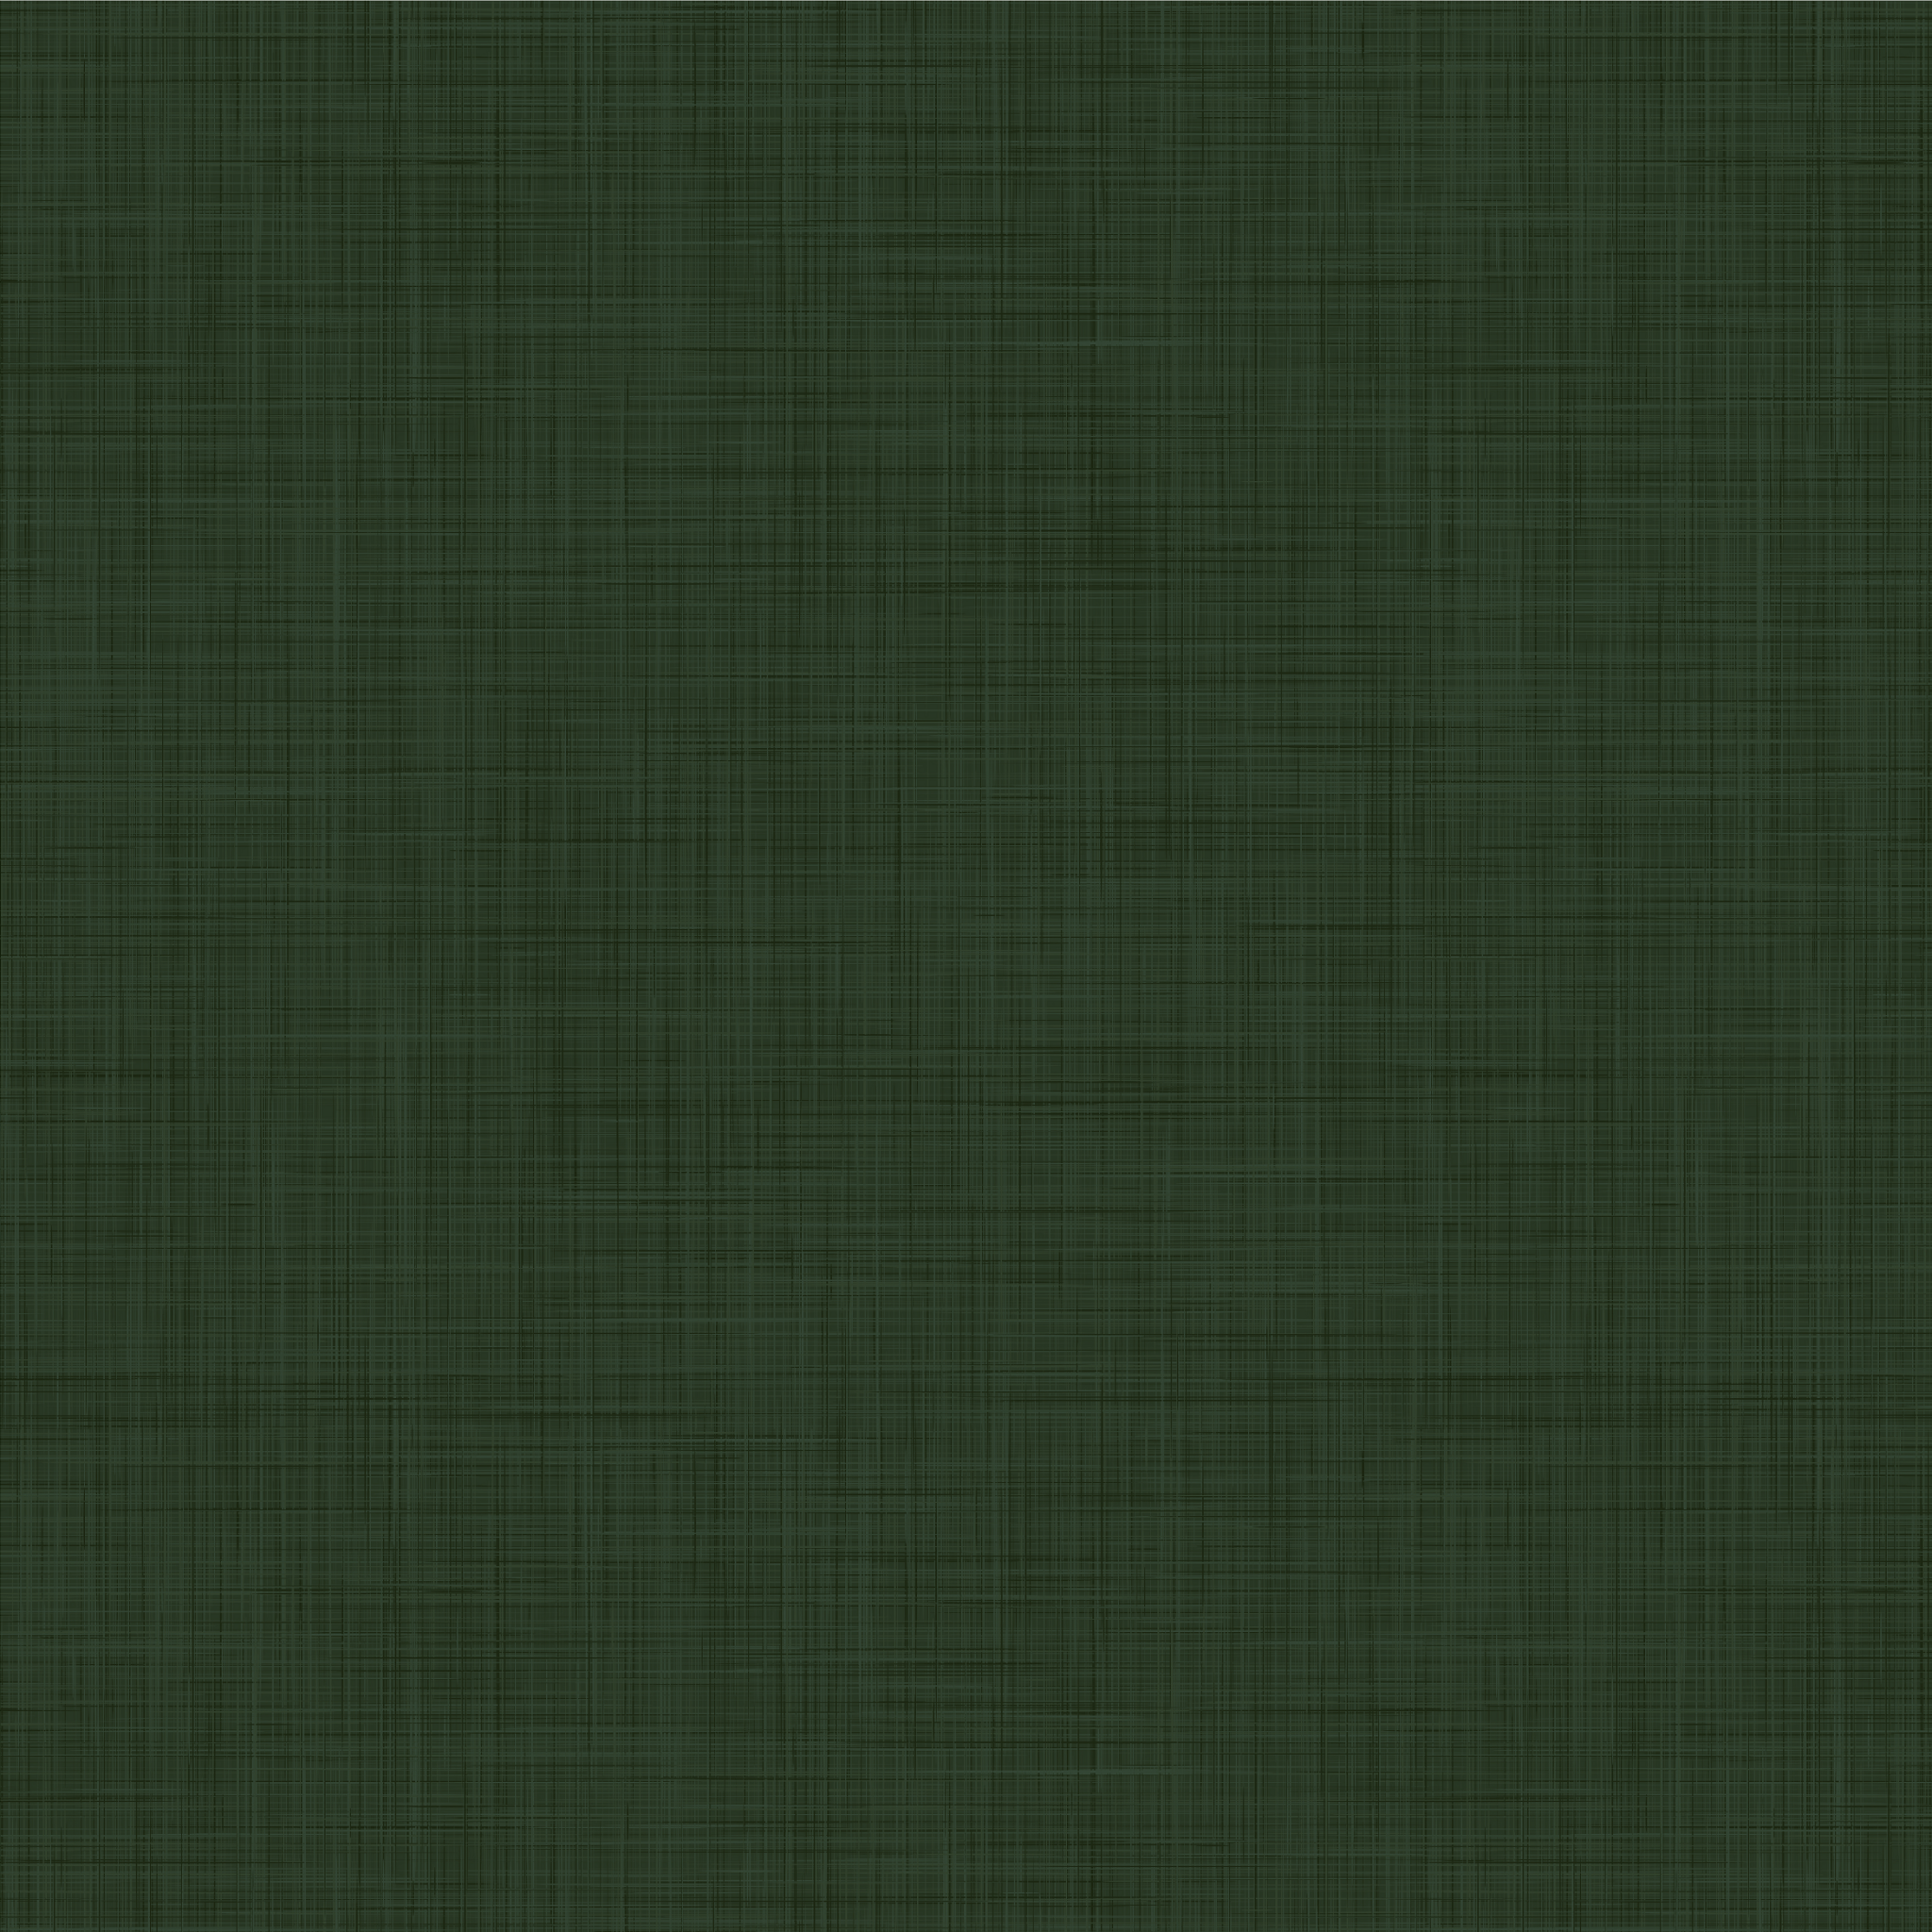 Forest Green Grasscloth Removable wallpaper samples